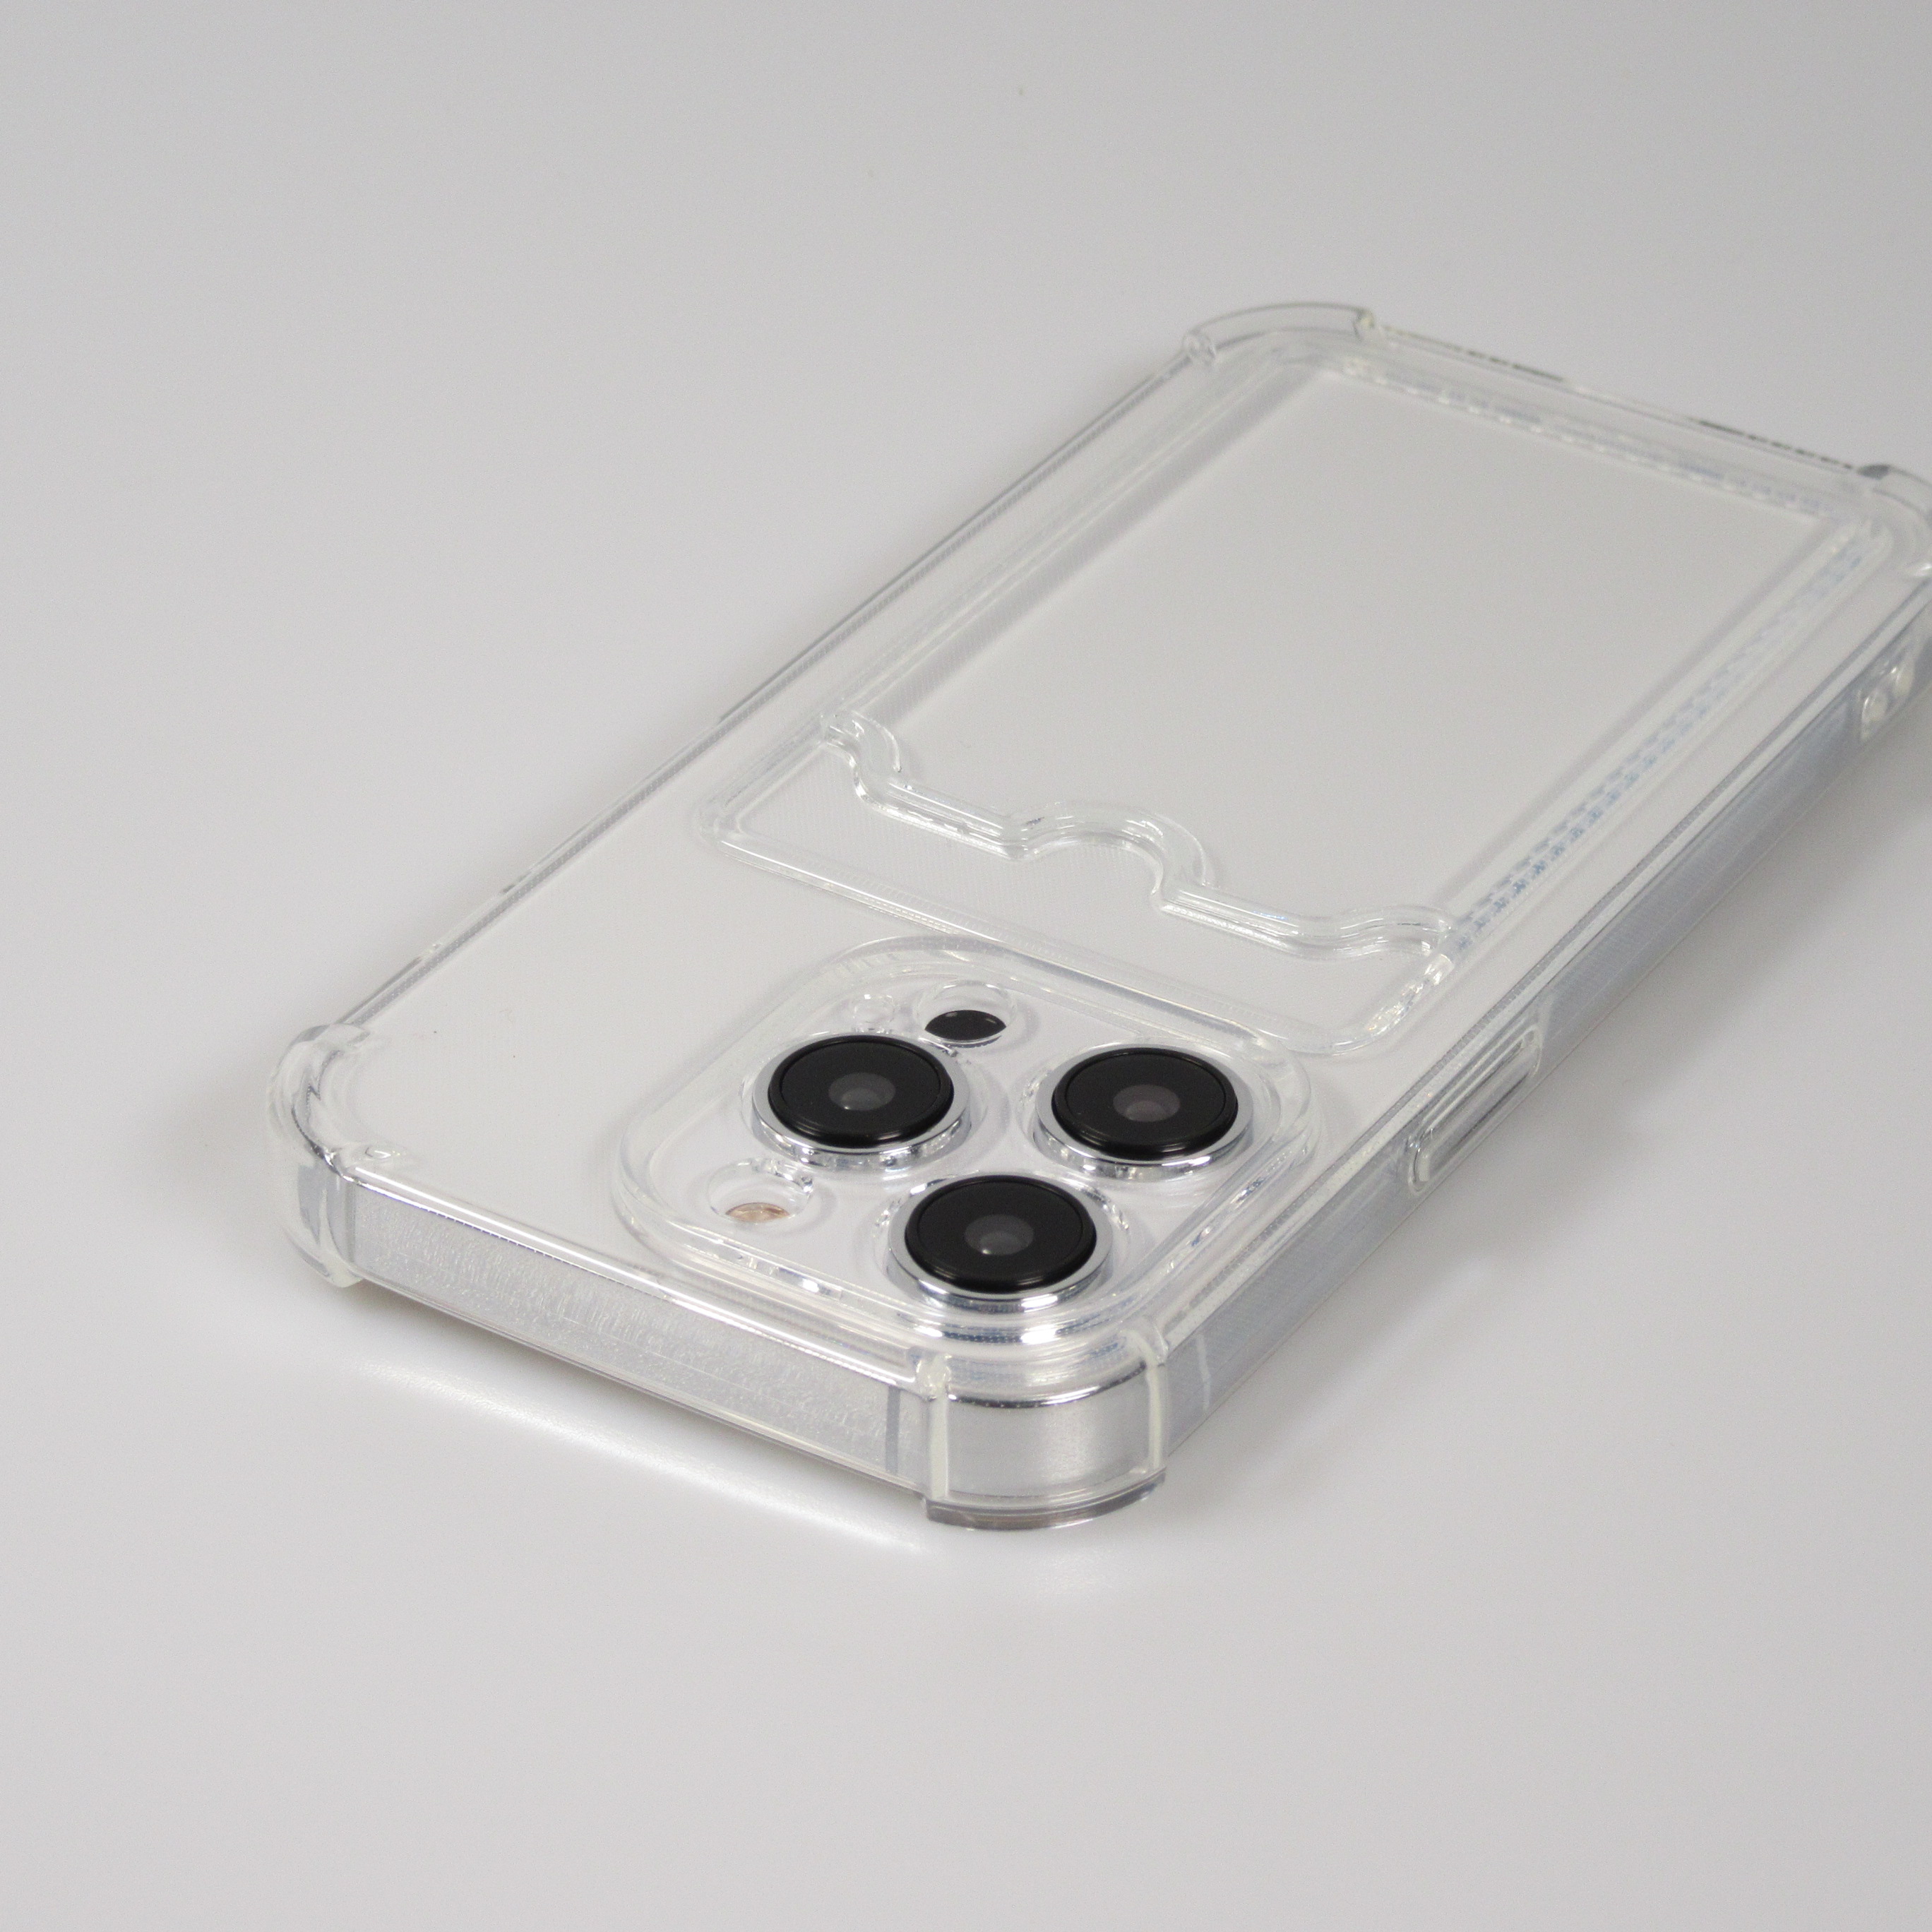 Coque iPhone 12 porte-cartes silicone (transparente) 